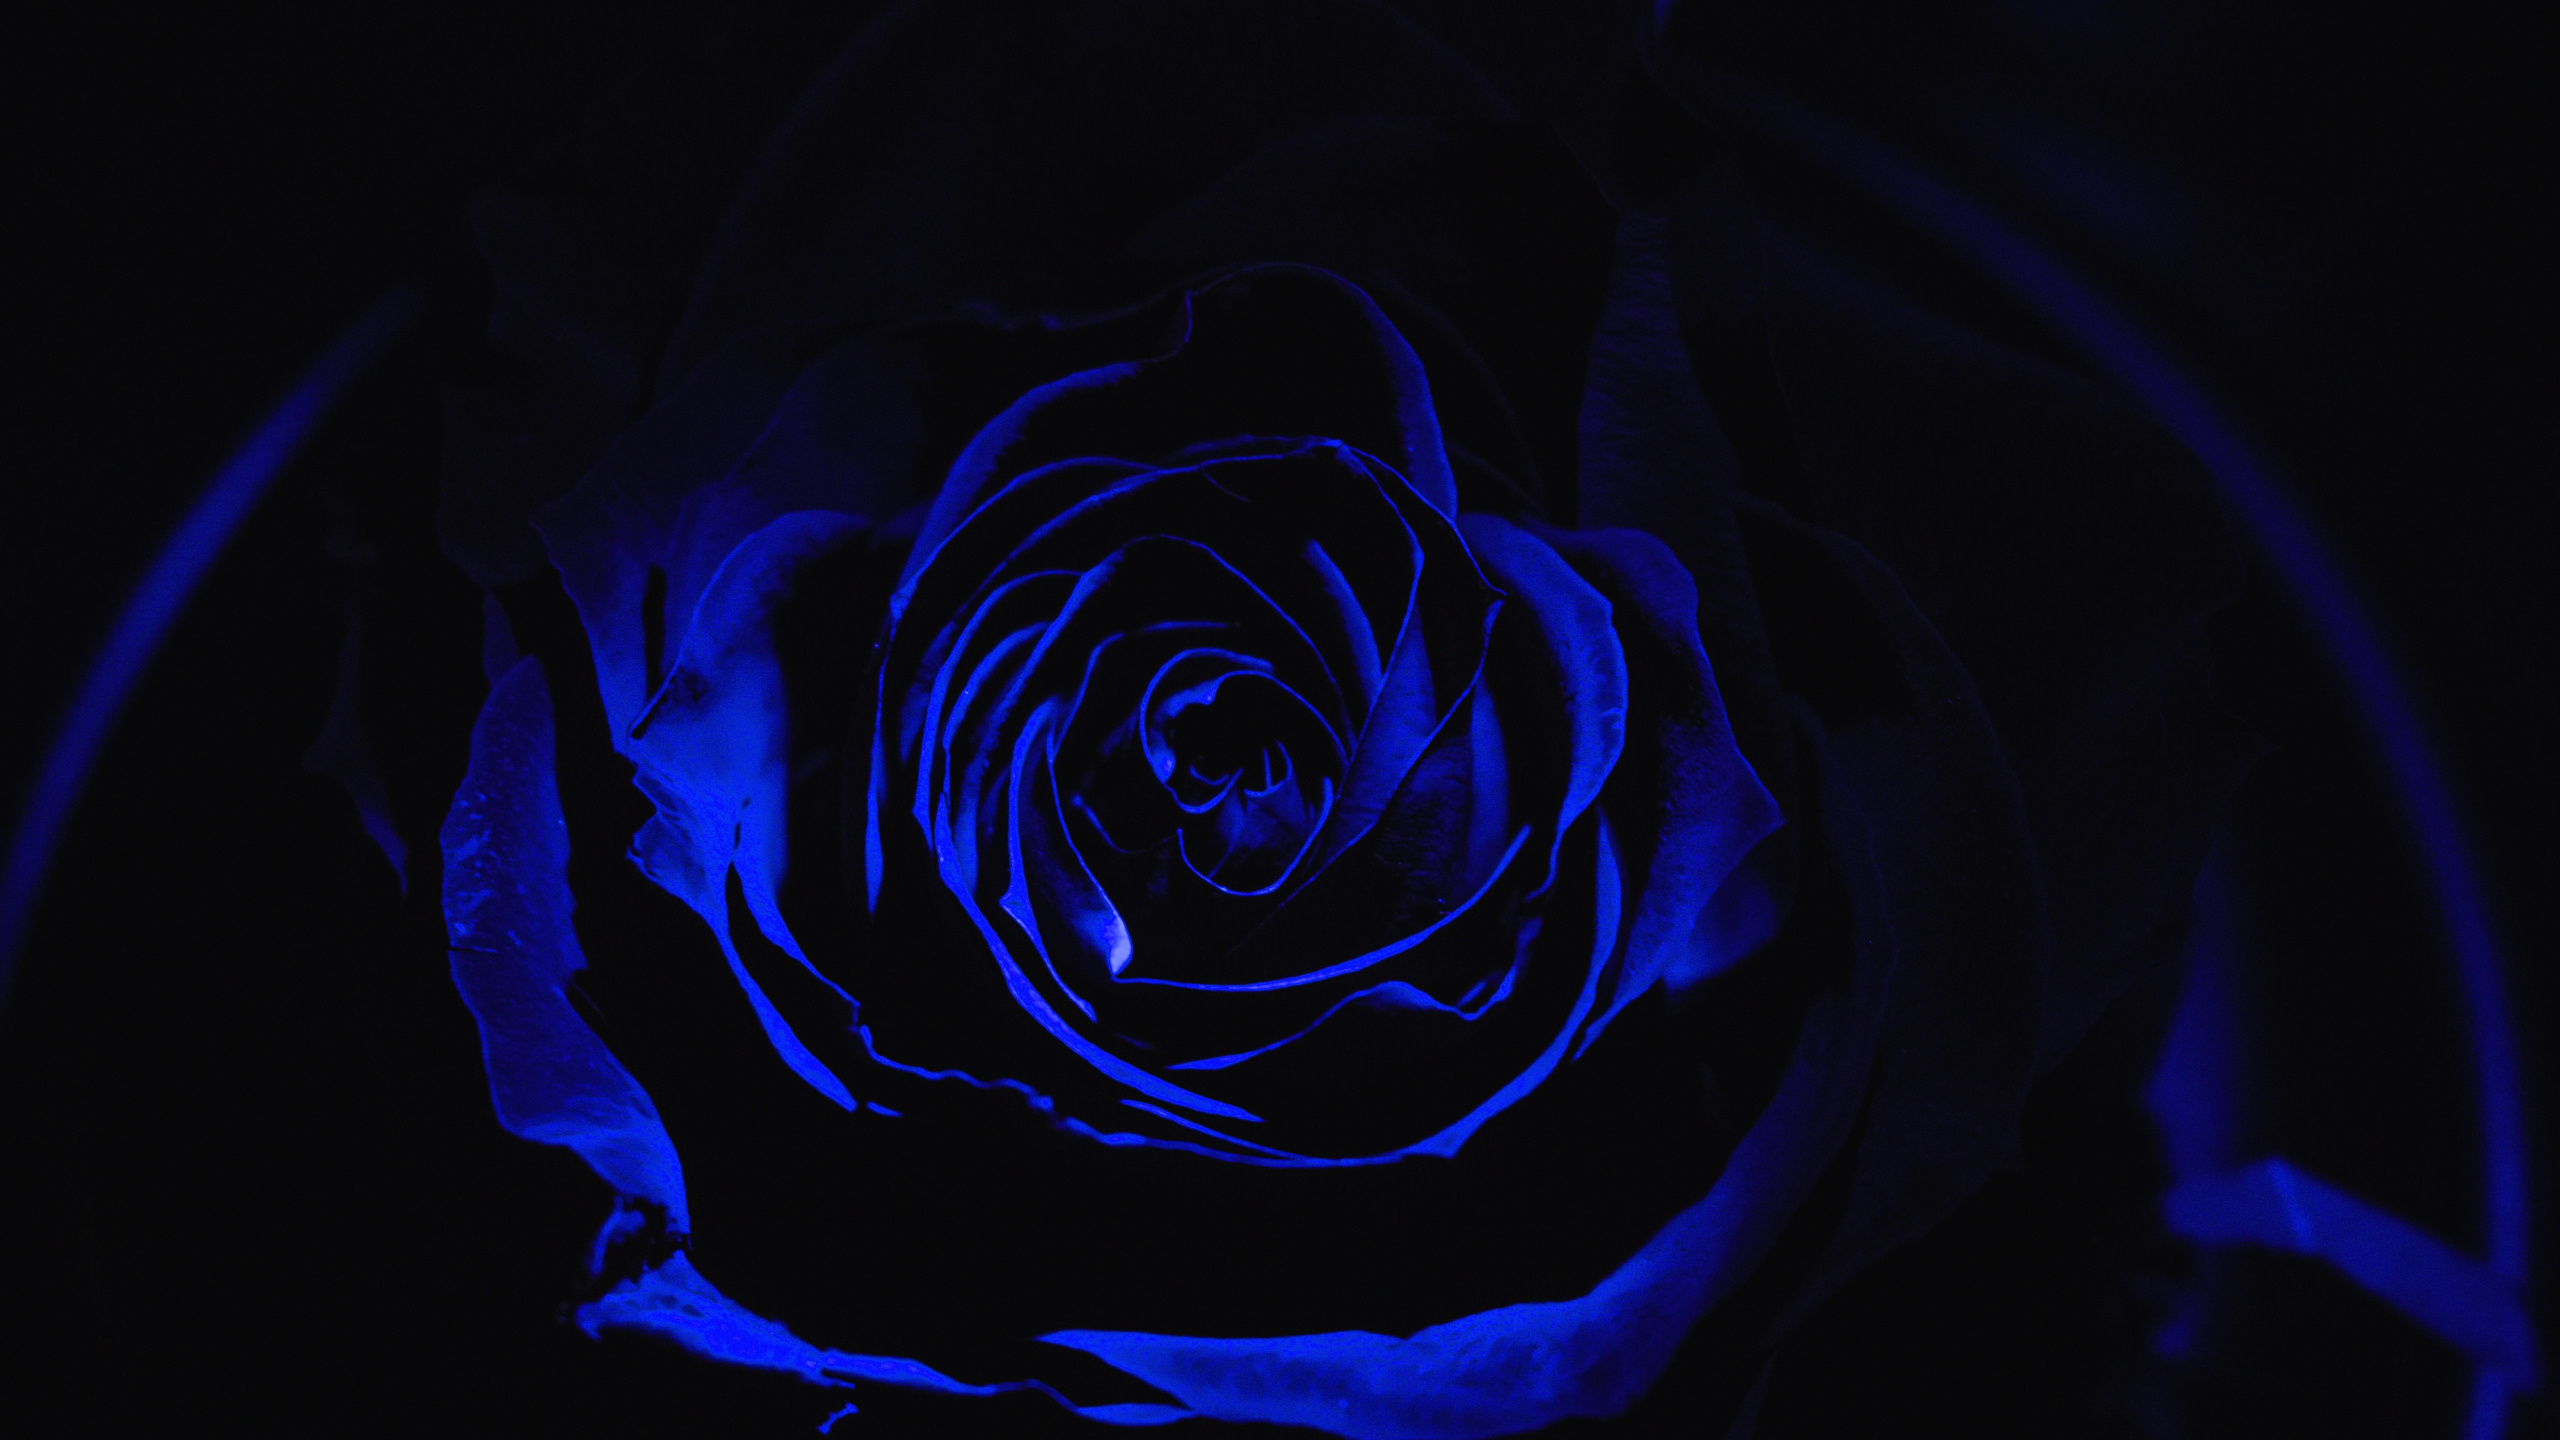 Blaue Rose in Nahaufnahmen. Wallpaper in 2560x1440 Resolution